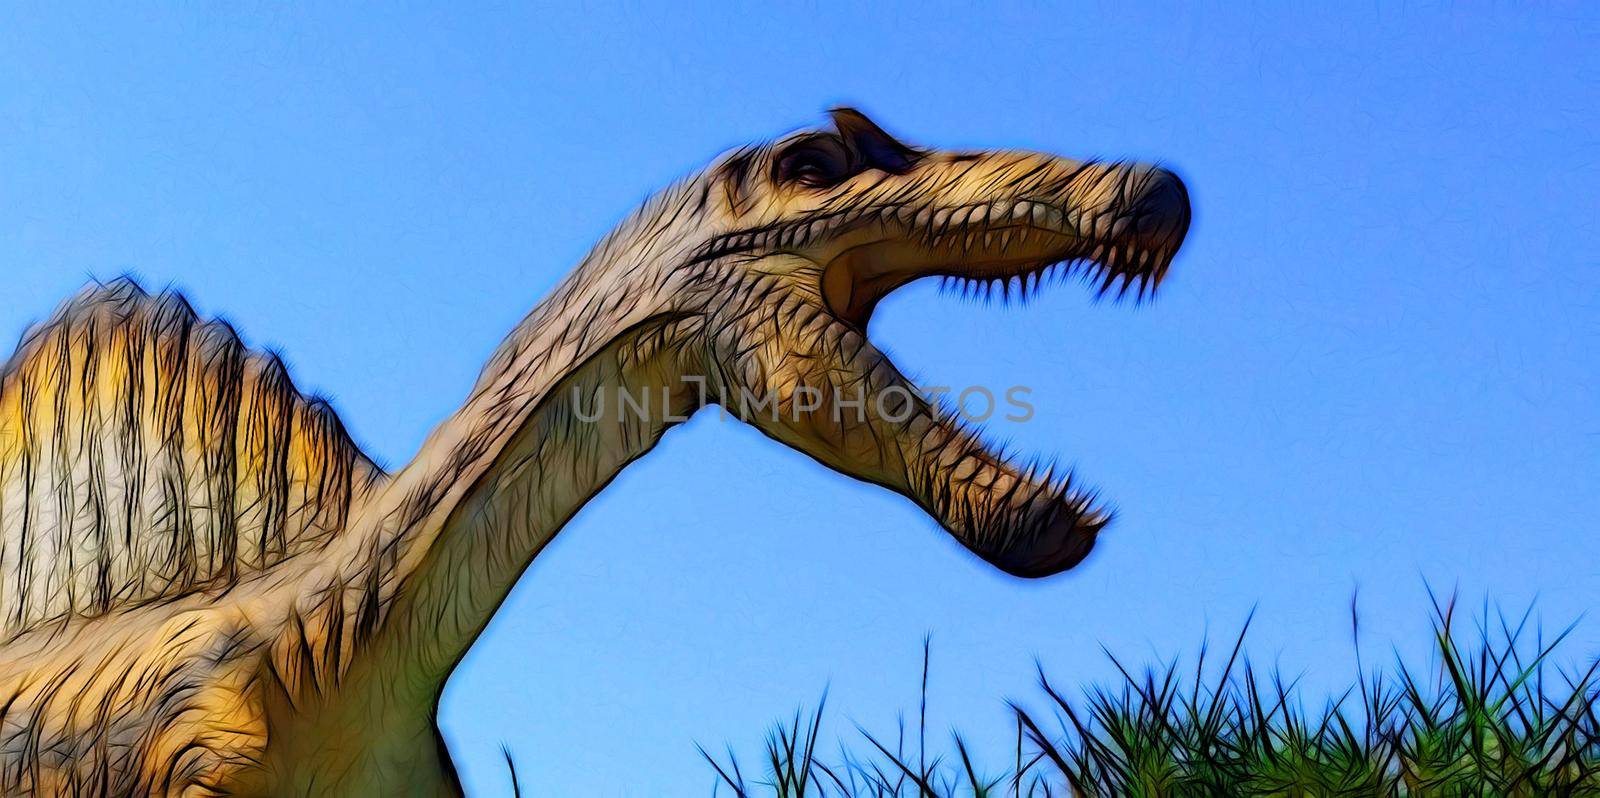 Digital painting style representing a spinosaurus by Jamaladeen